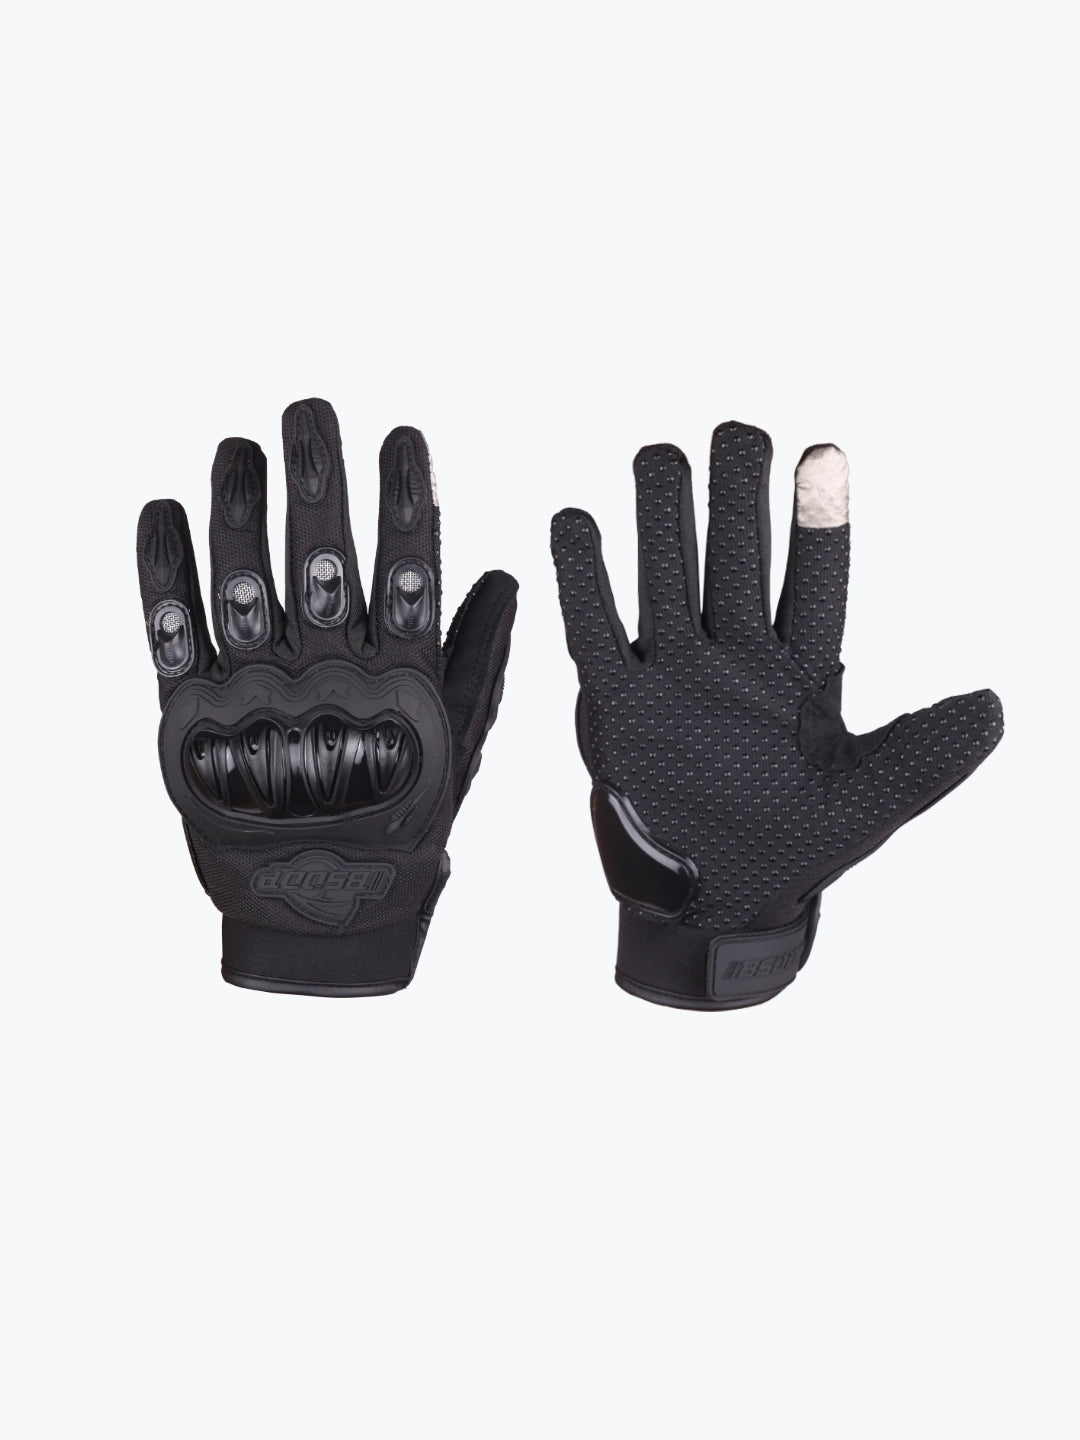 BSDDP Gloves A0107 Black